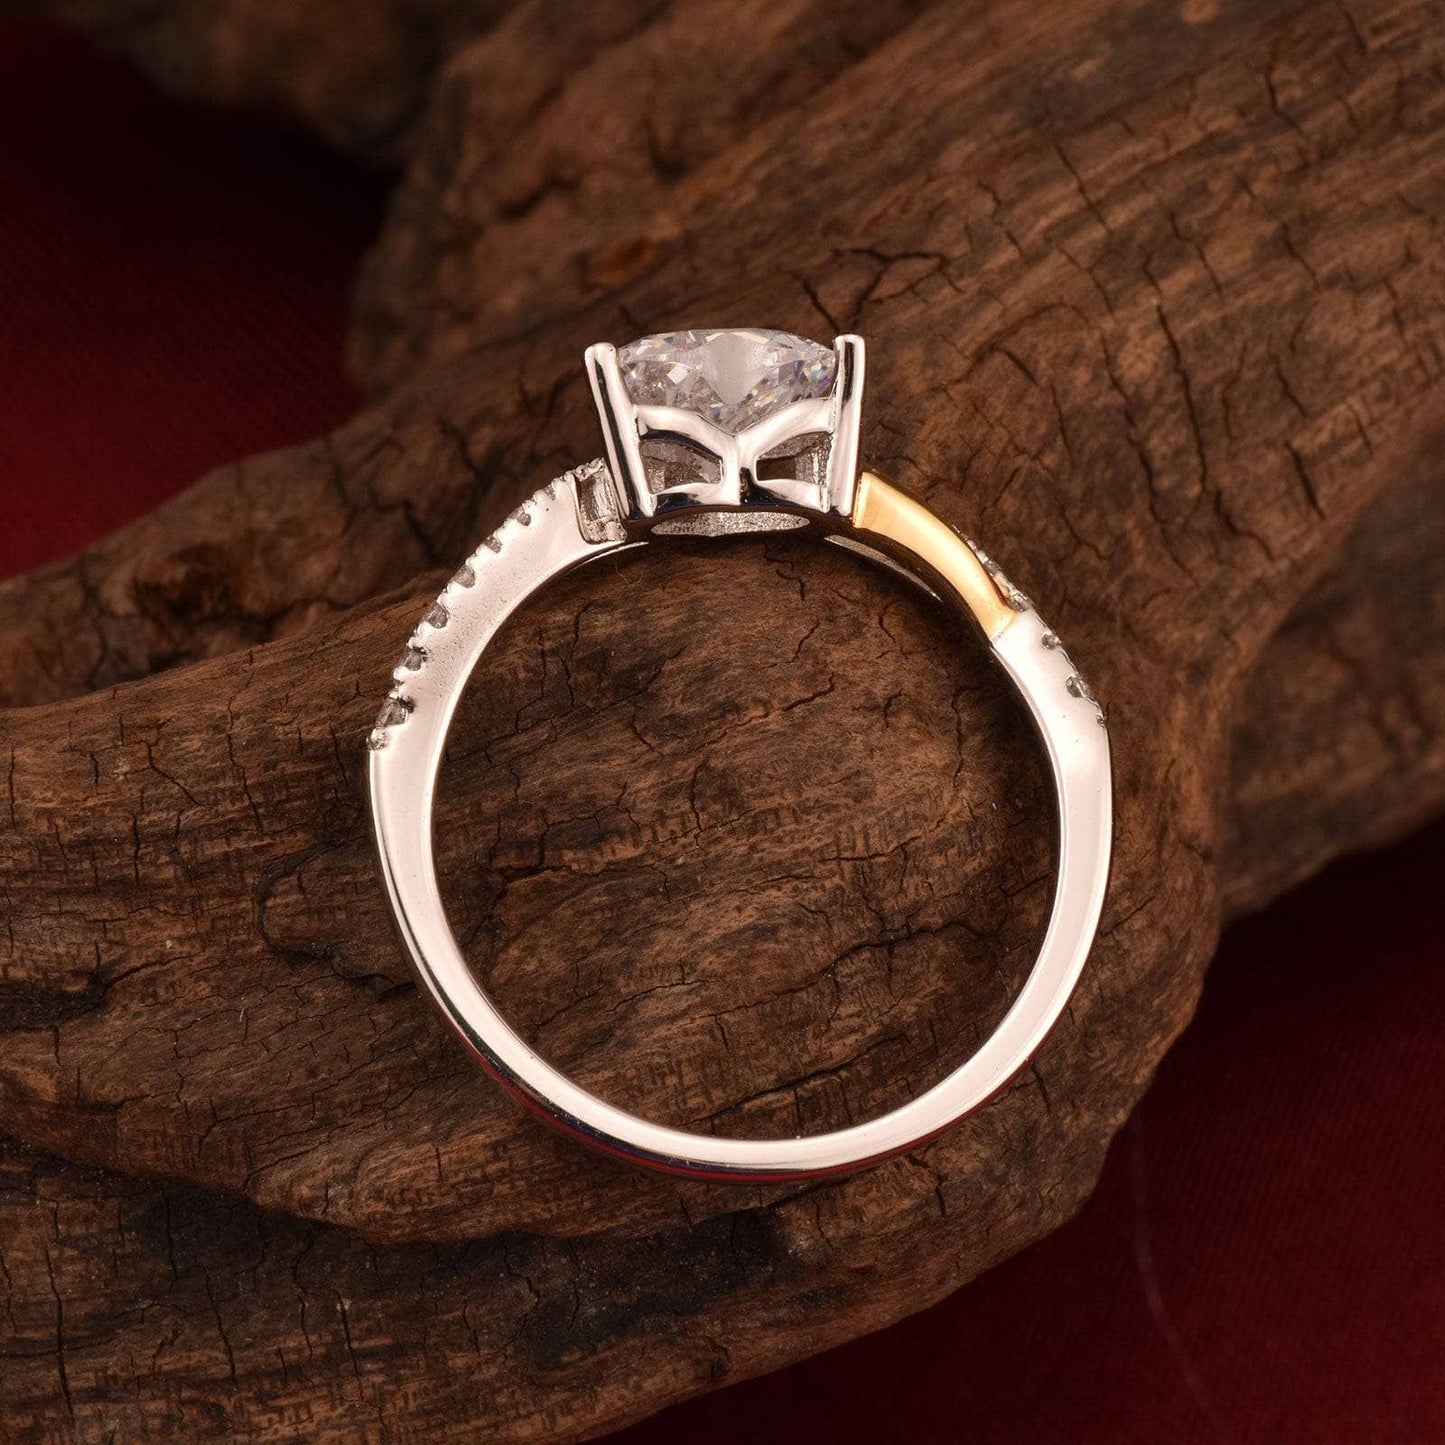 Engagement Rings by Black Diamonds New York